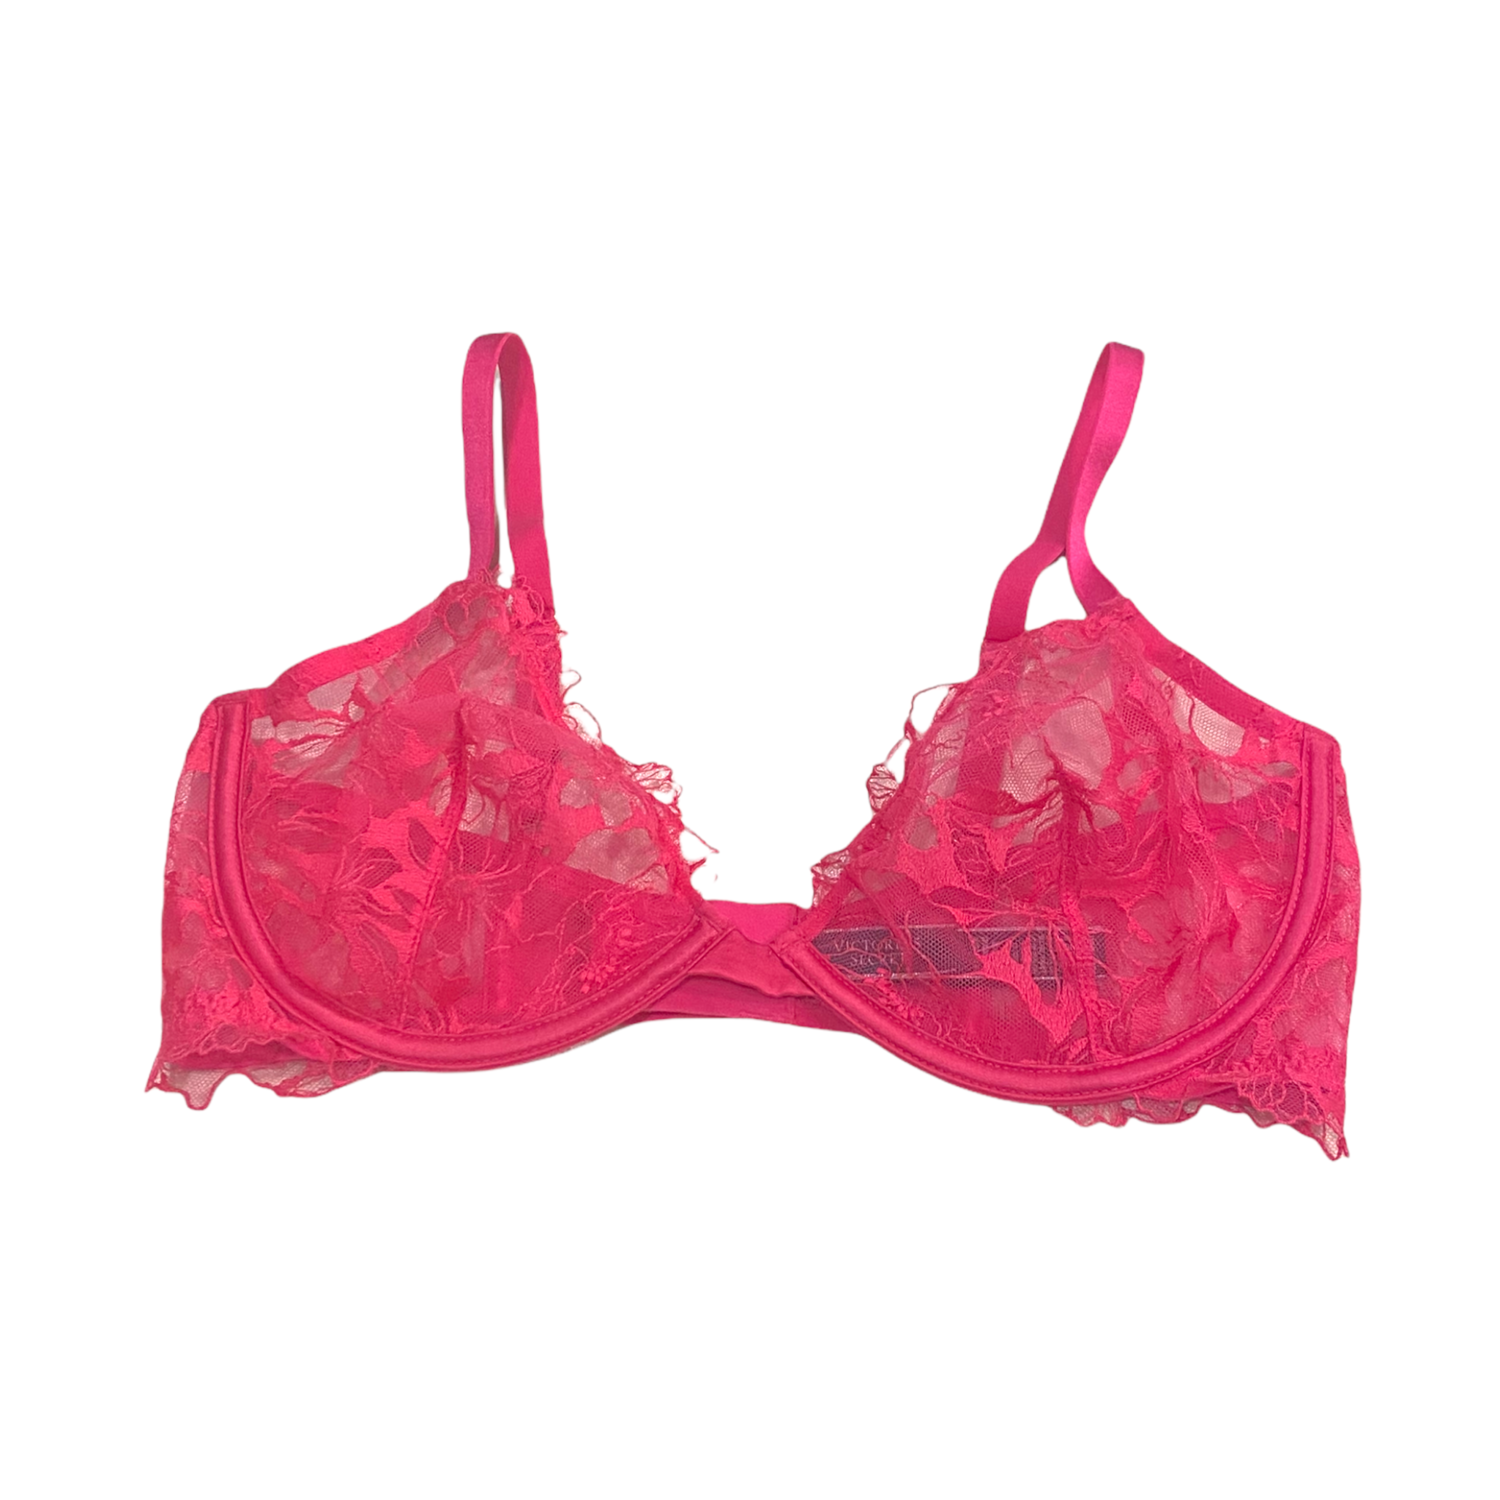 PINK - Victoria's Secret Red Lace Bralette Size L - $12 (58% Off